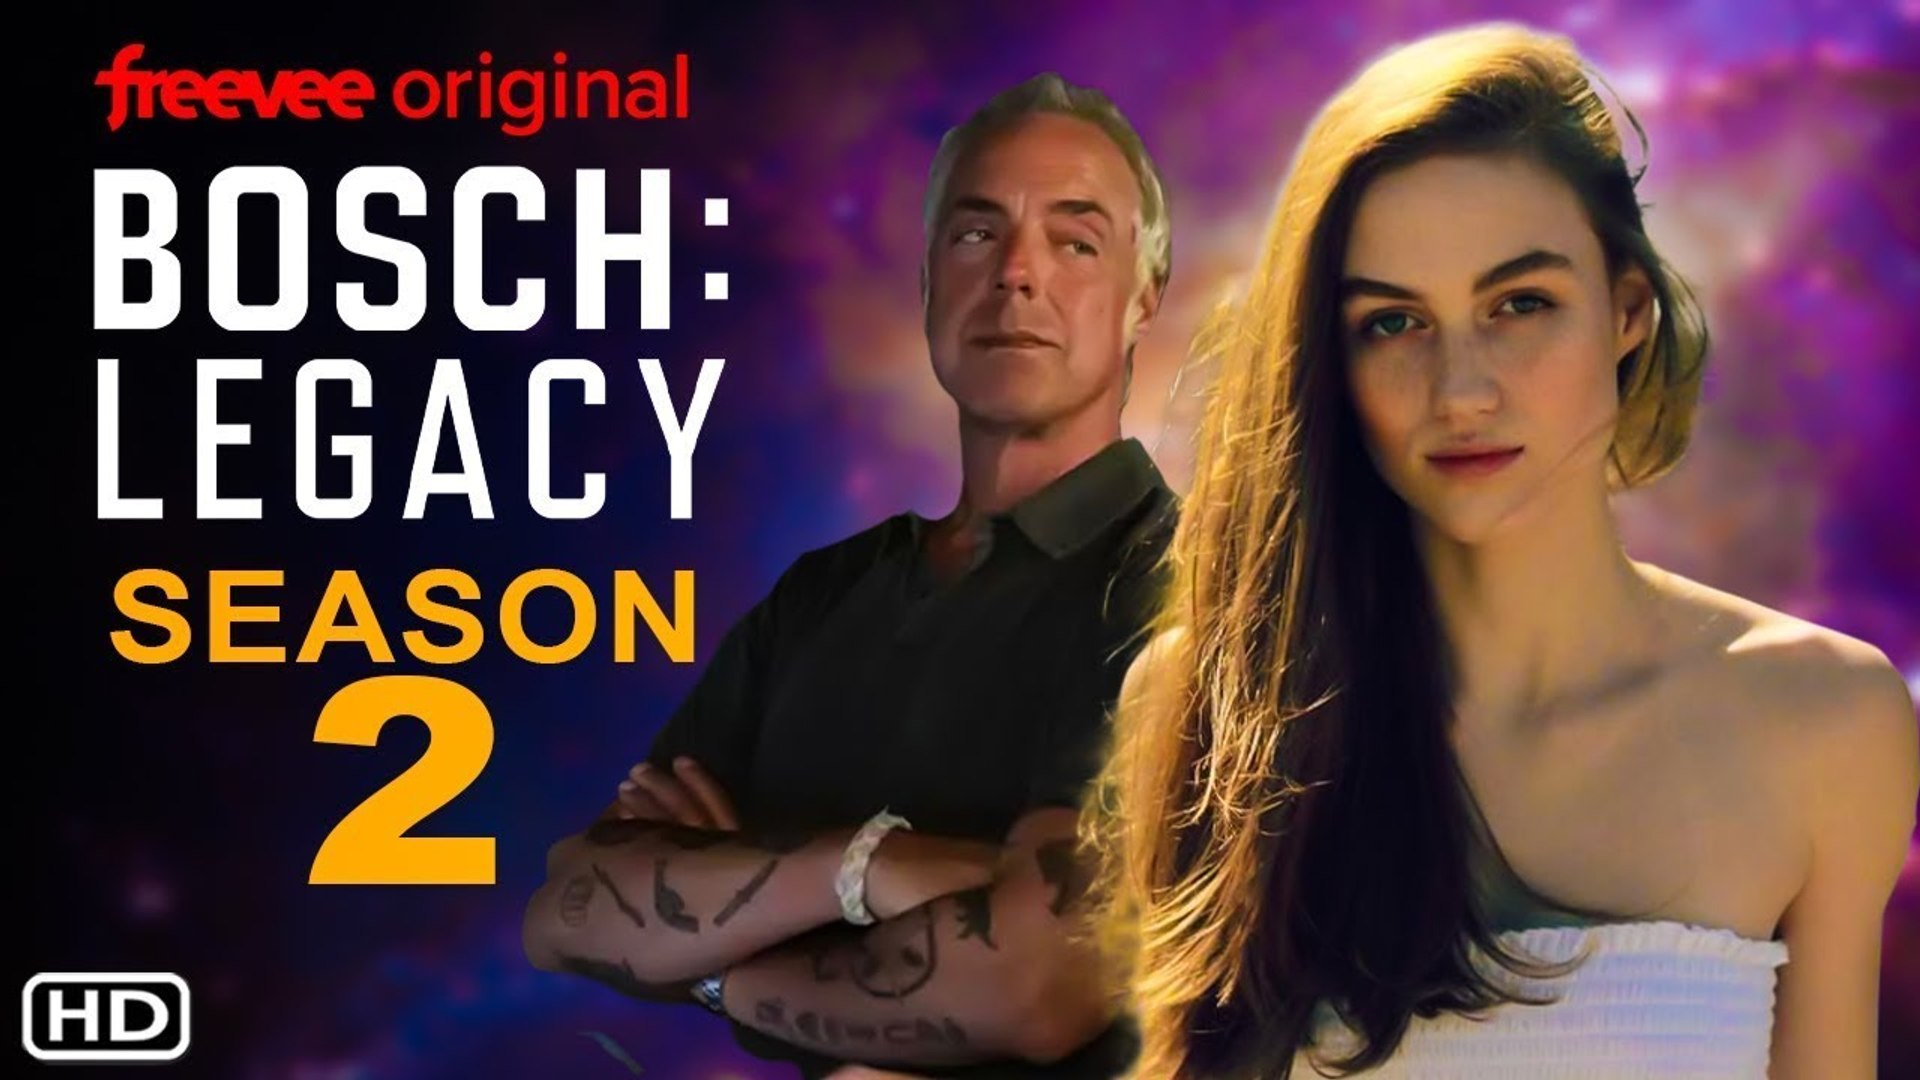 Bosch Legacy Season 2 Teaser -  Freevee, Review - video